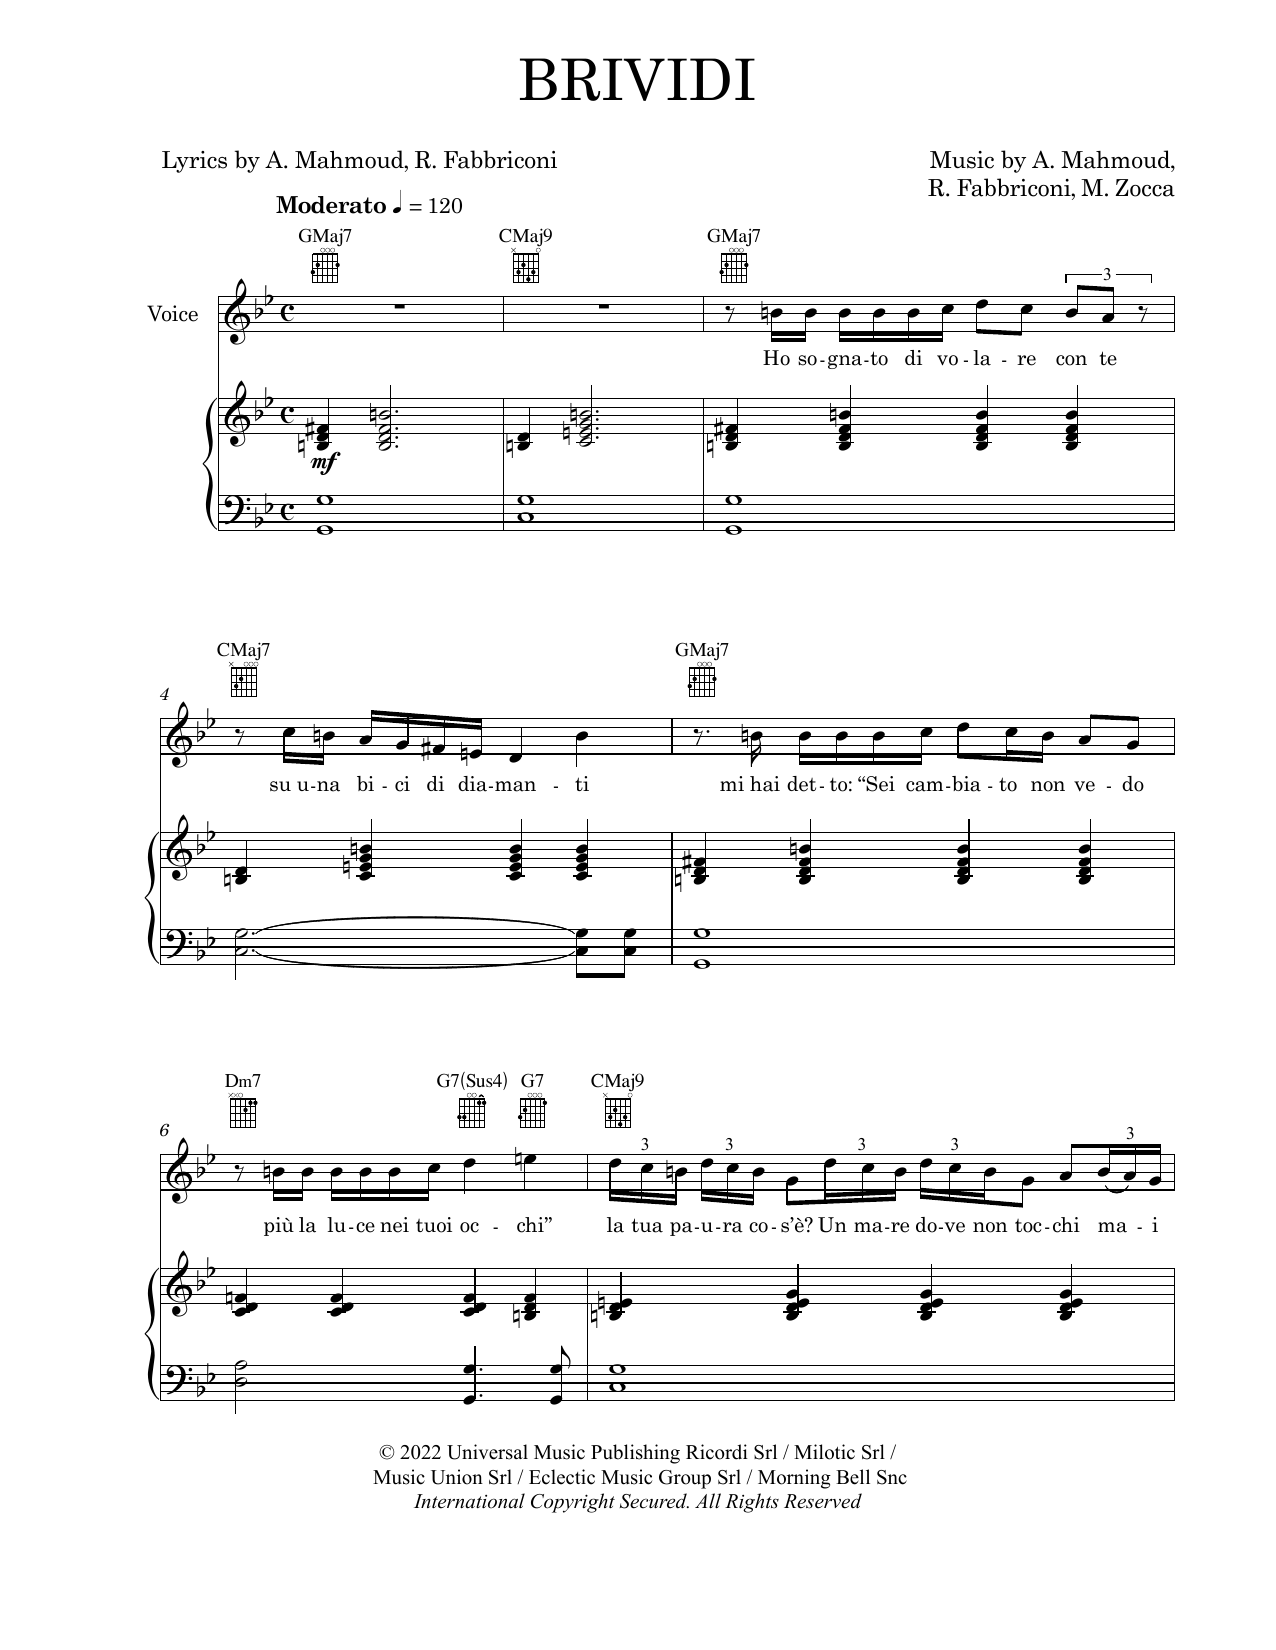 Mahmood & BLANCO Brividi Sheet Music Notes & Chords for Piano, Vocal & Guitar Chords (Right-Hand Melody) - Download or Print PDF